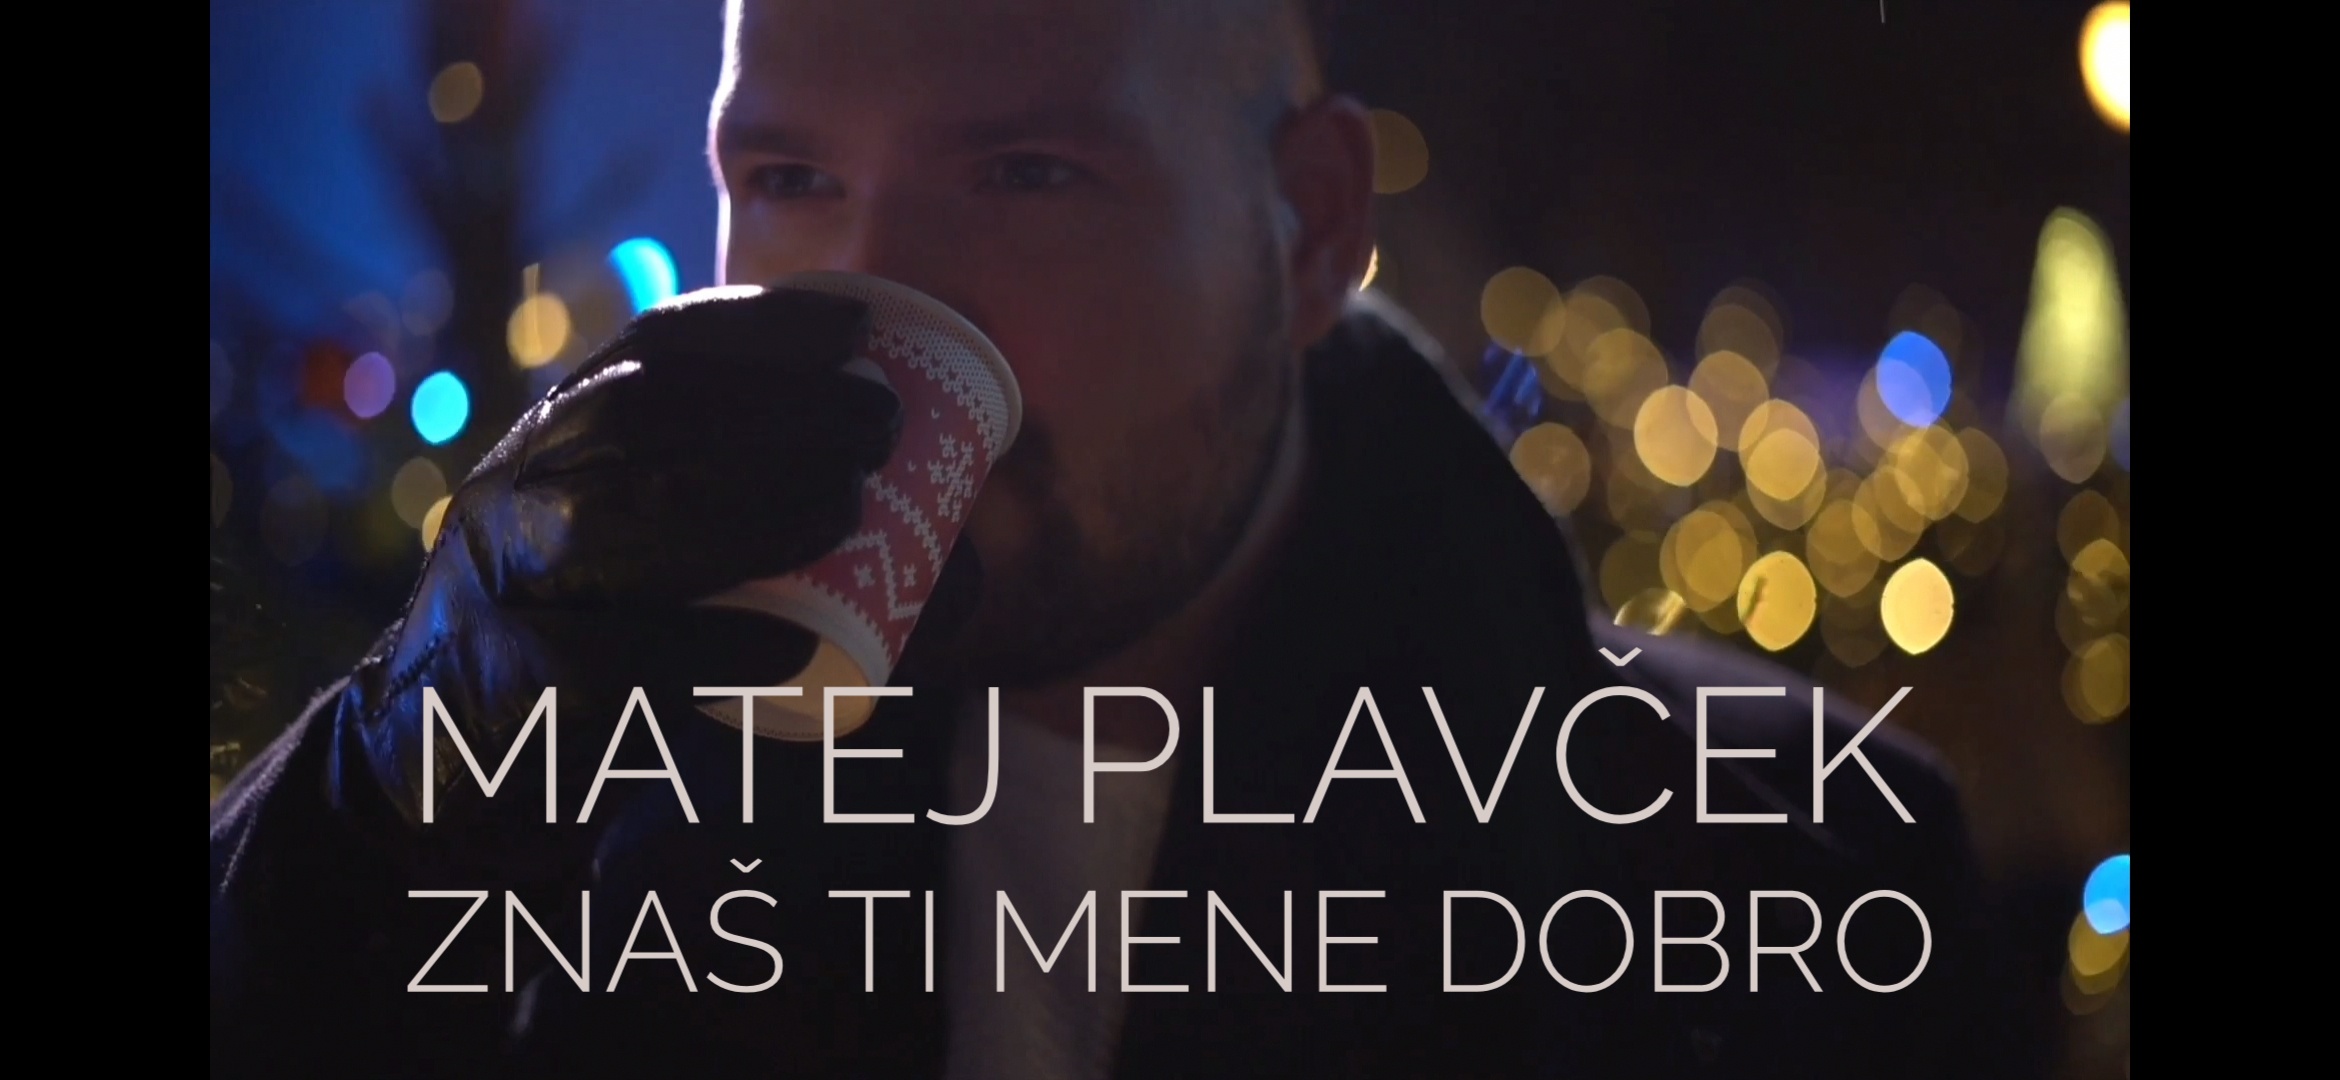 "ZNAŠ TI MENE DOBRO" Predstavljen novi spot Mateja Plavčeka